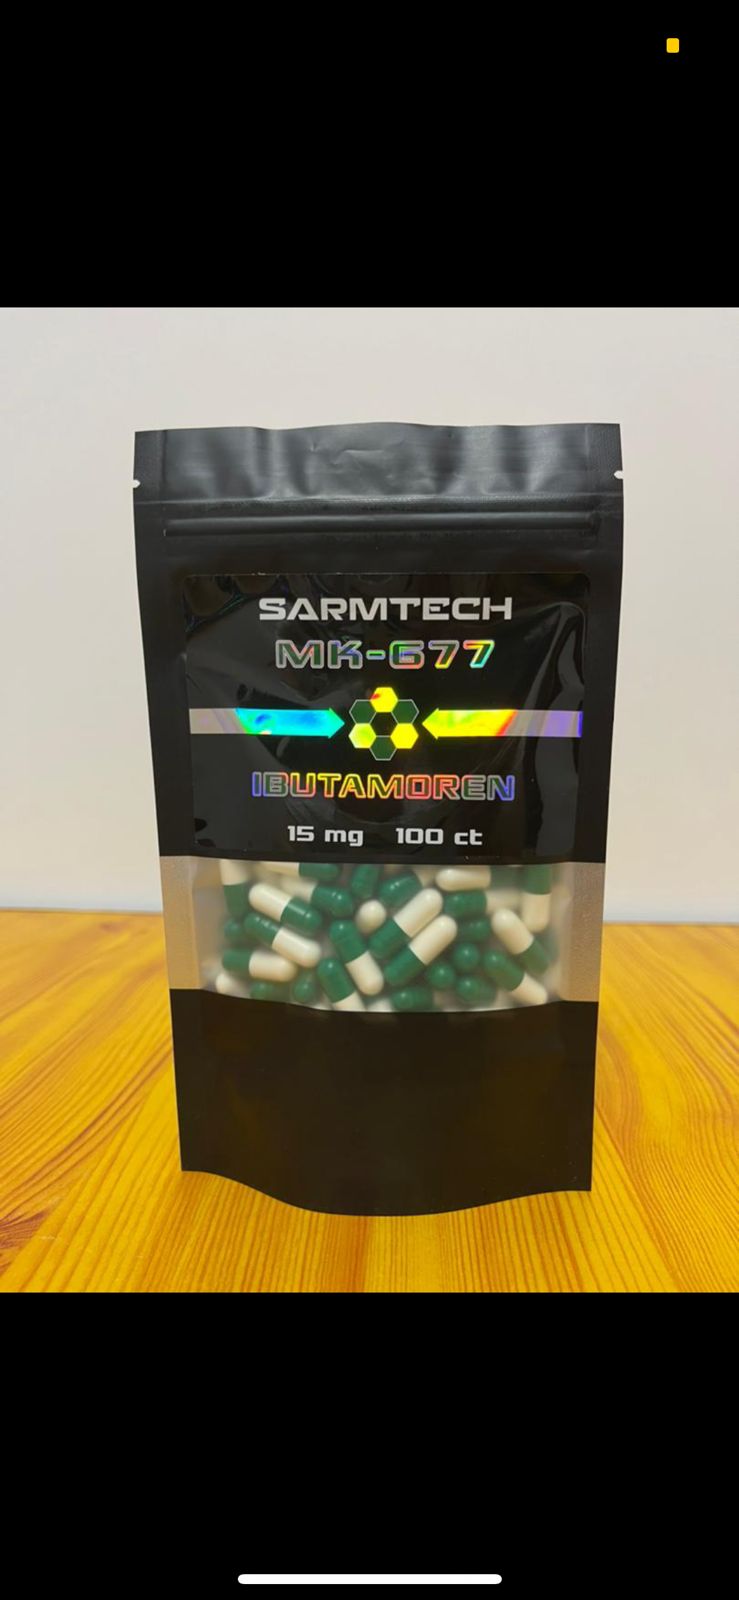 SARMTECH Ibutamoren MK-677 Ибутаморен 15 мг 100 капс.